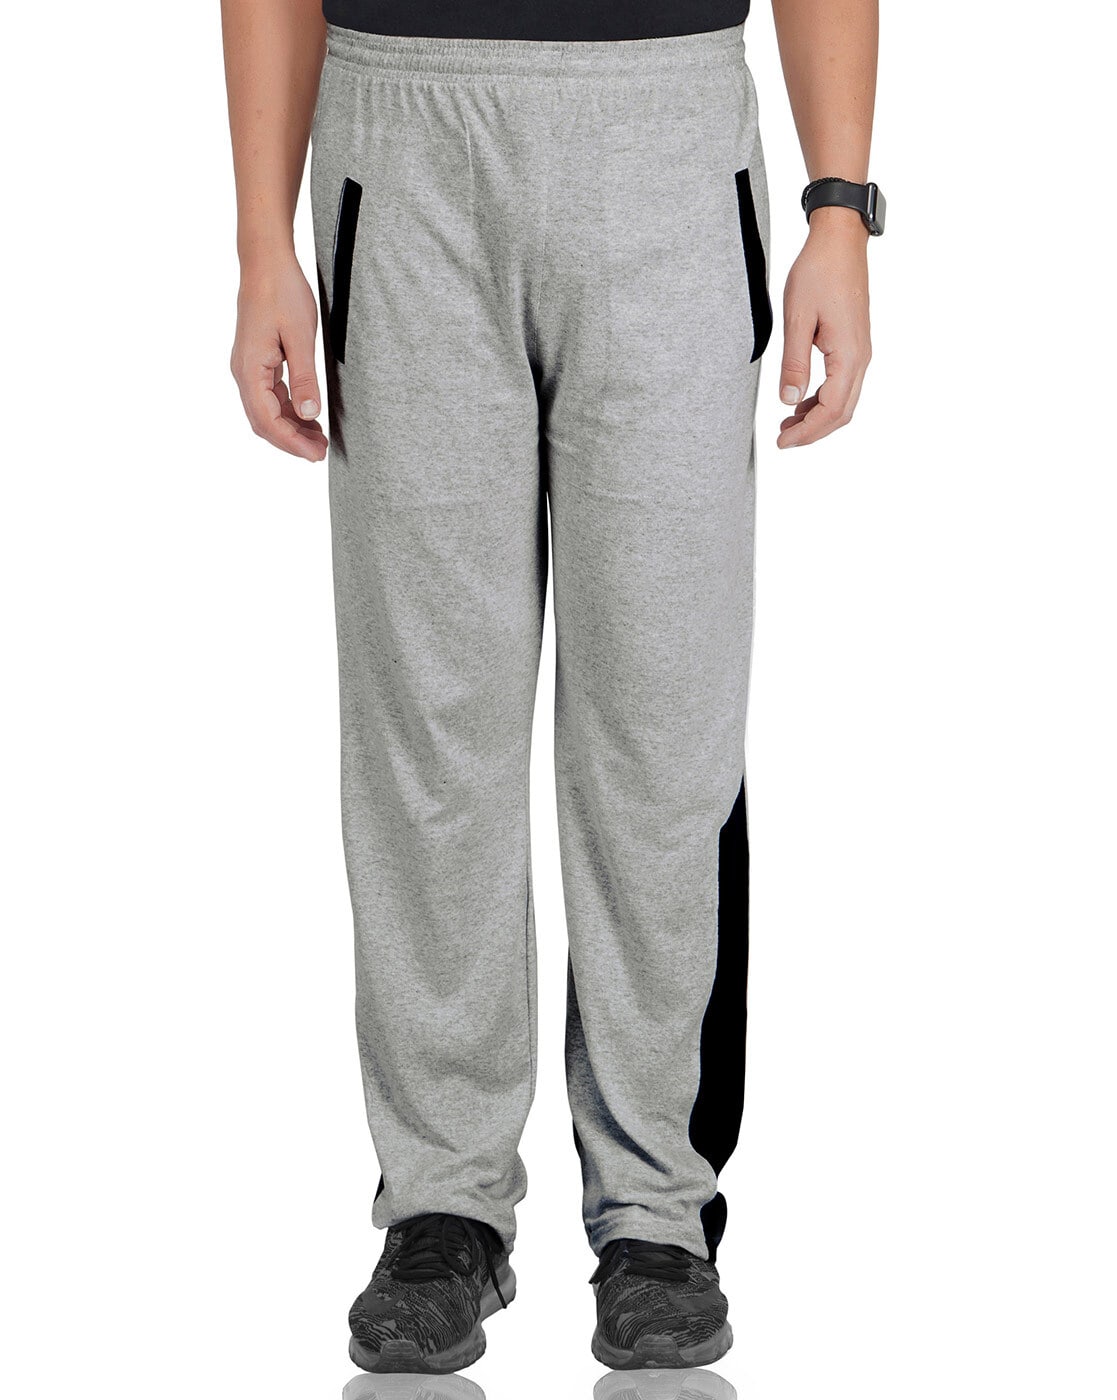 Asics Mens Knit Jogger Pants Size L-XL Gray Reflective Accents Zip hand  Pockets | eBay